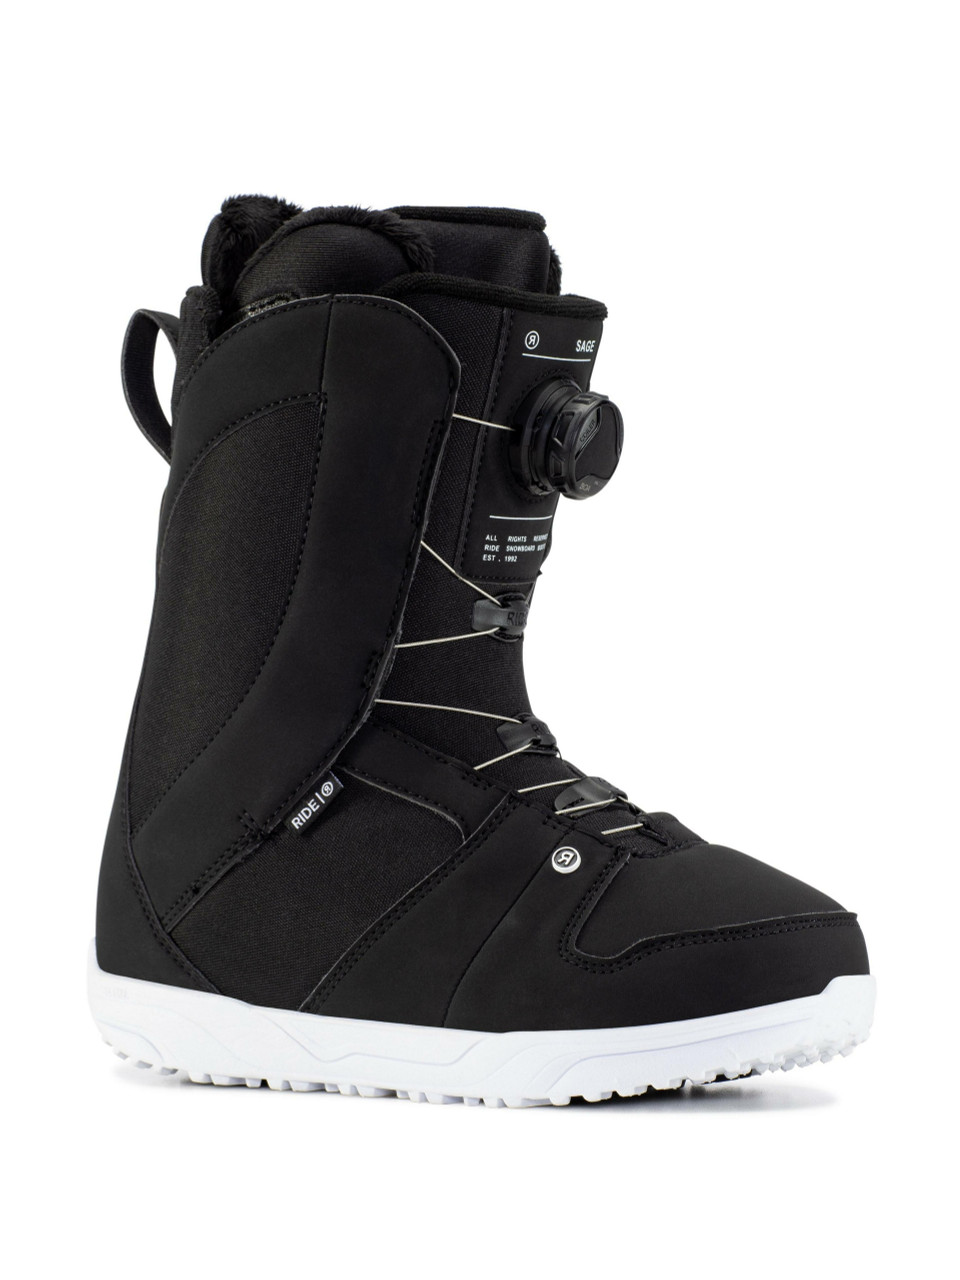 Ride Sage Snowboard Boots Womens Black White